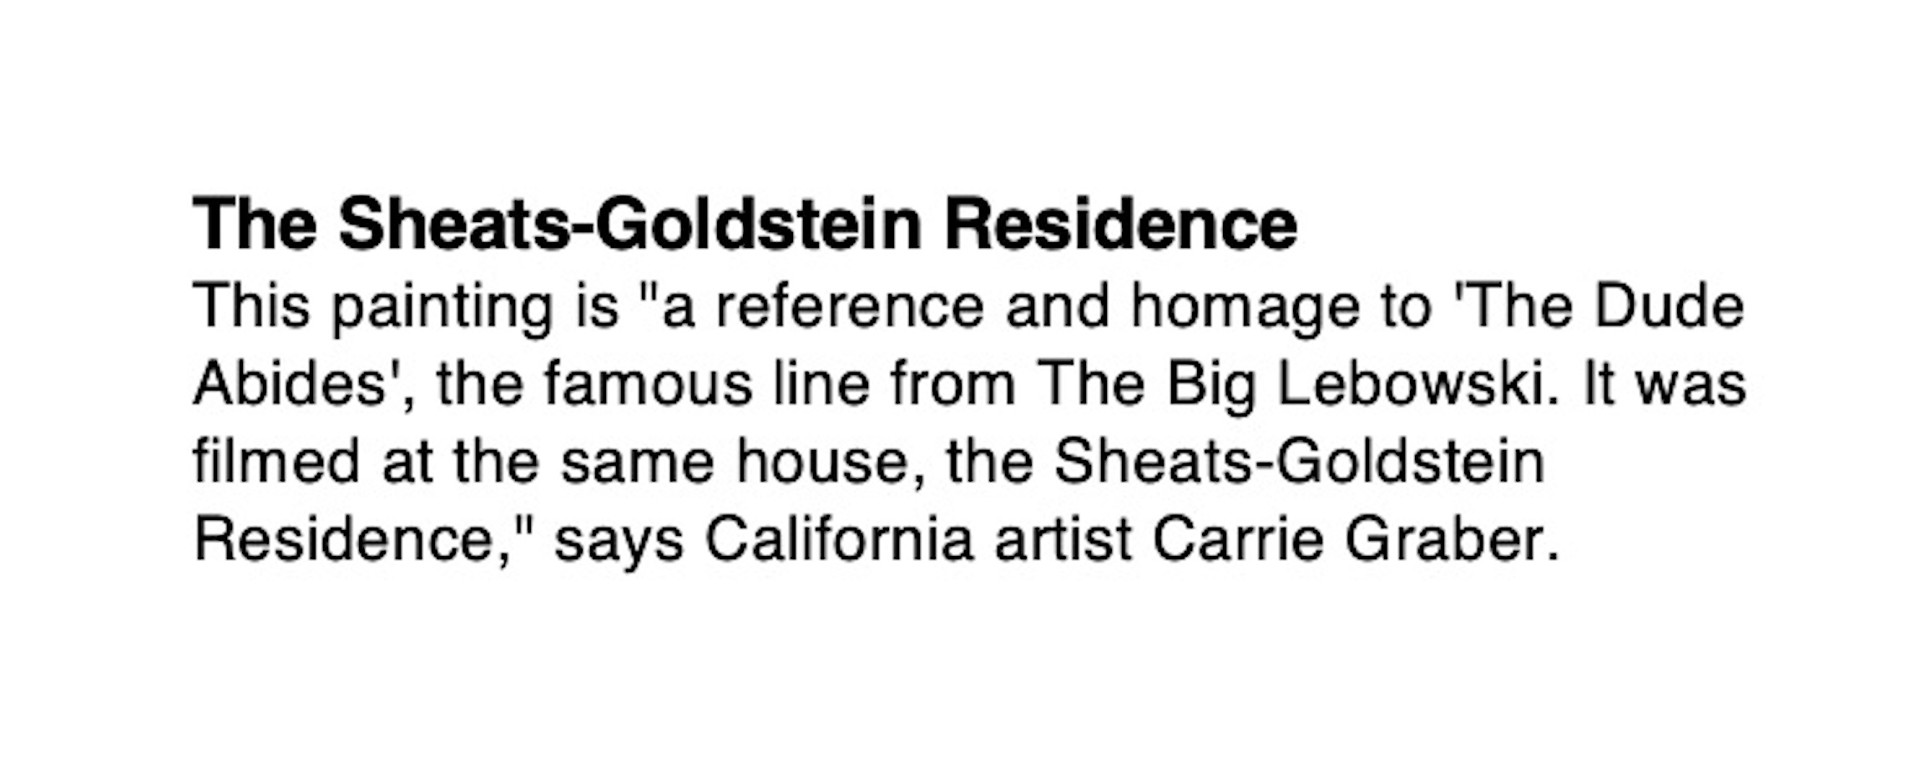 The Sheats-Goldstein Residence